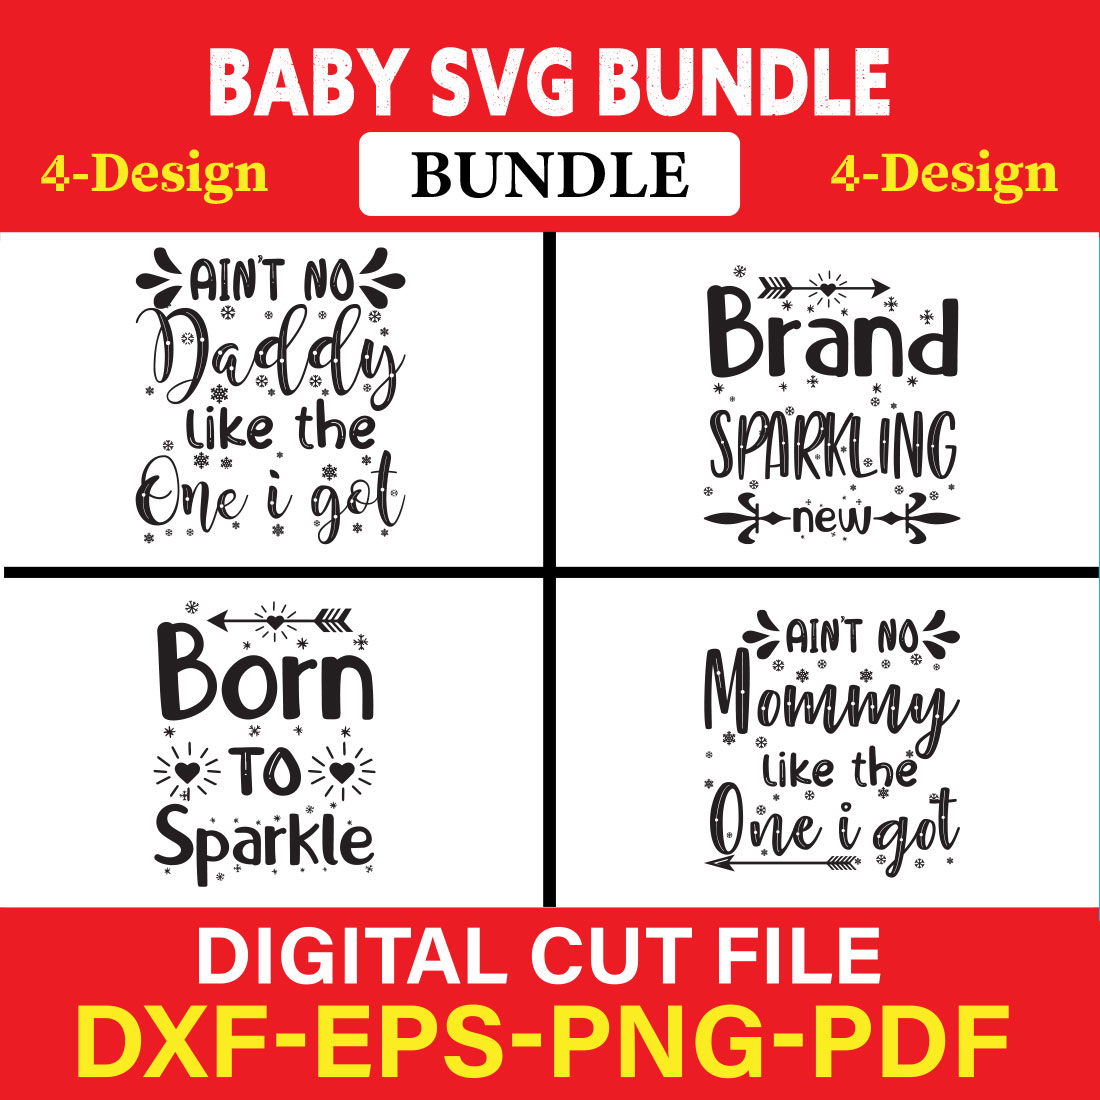 Baby T-shirt Design Bundle Vol-8 cover image.